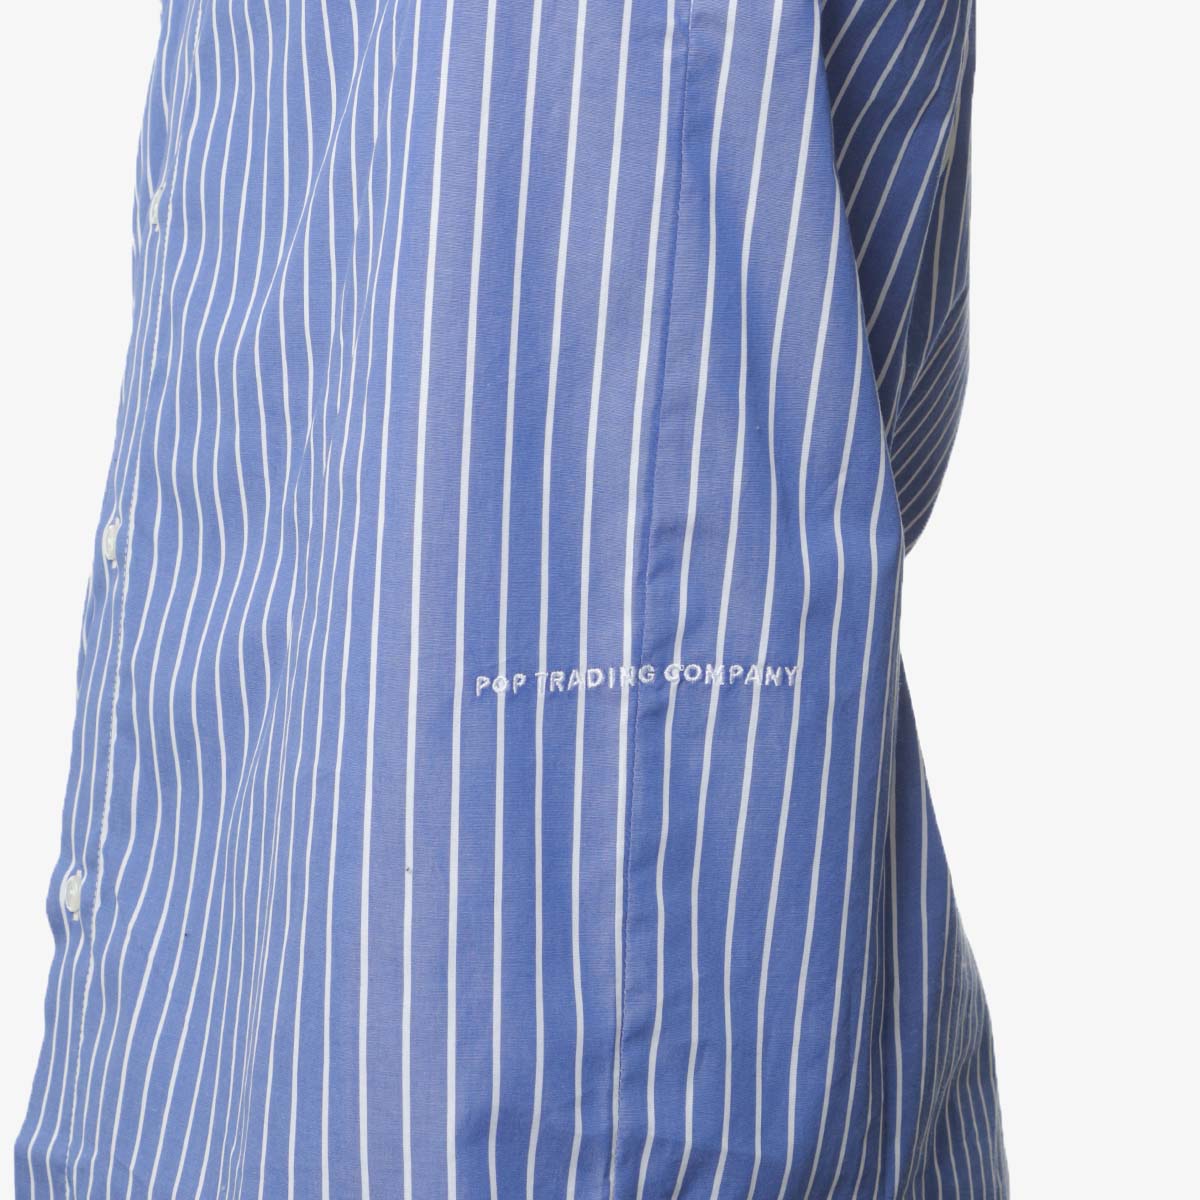 Pop Trading Company Logo Striped Shirt, Blue, Detail Shot 4